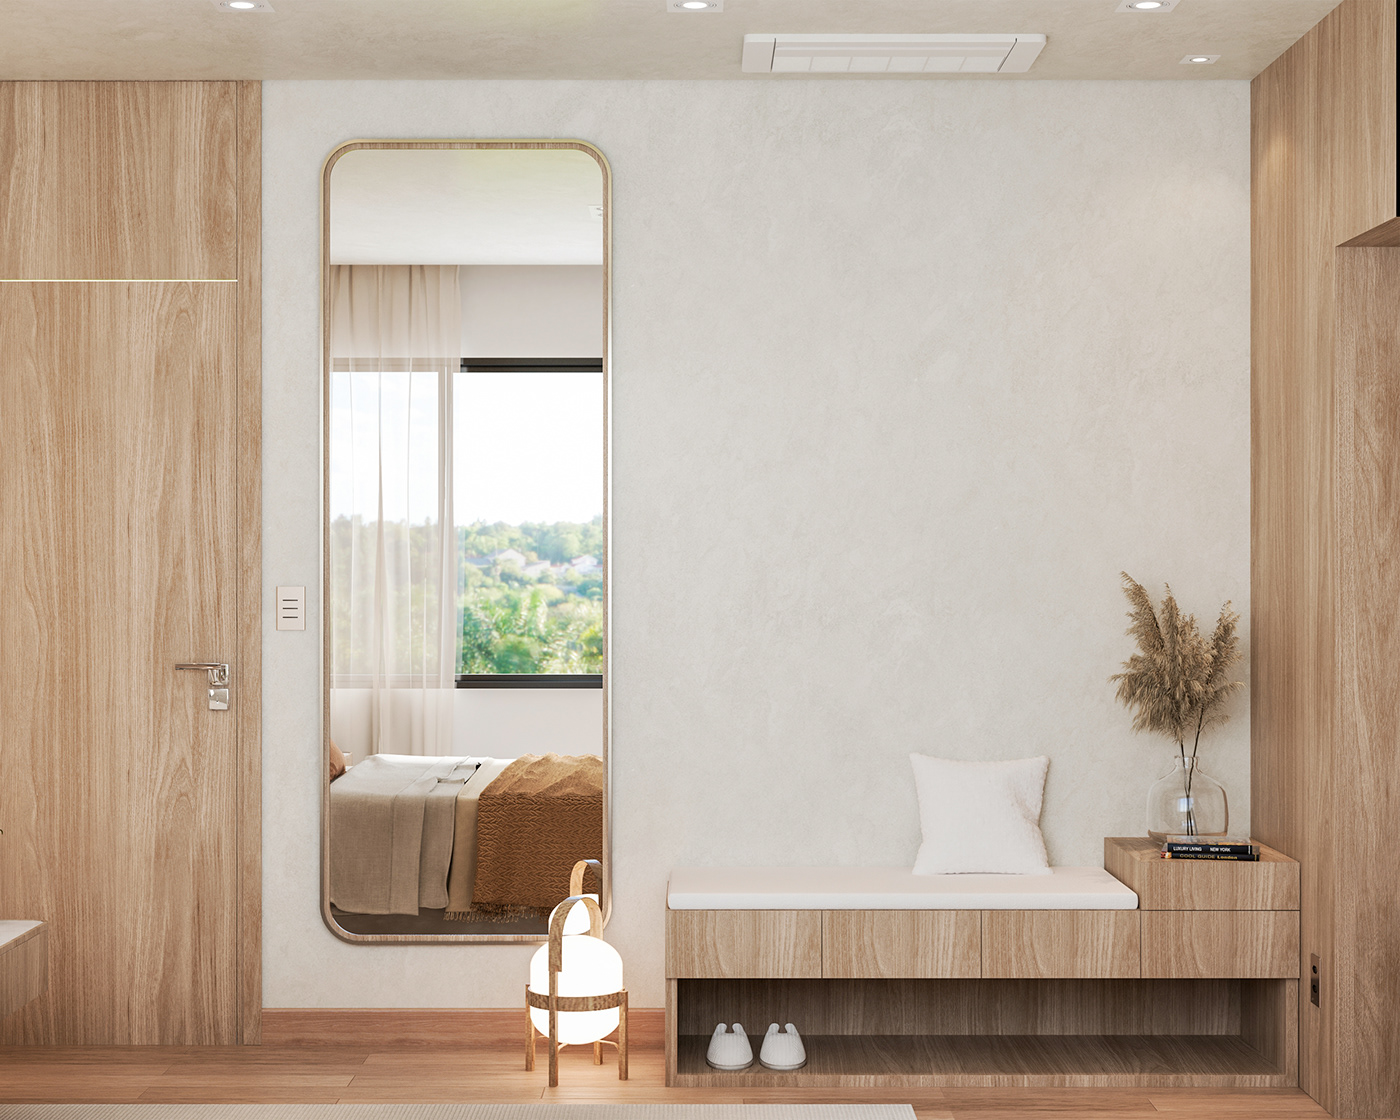 bedroomdesign interiordesign INTERIORDESIGNOFFICE INTIMATEAREADESIGN livingdesign STUDIOZATRE